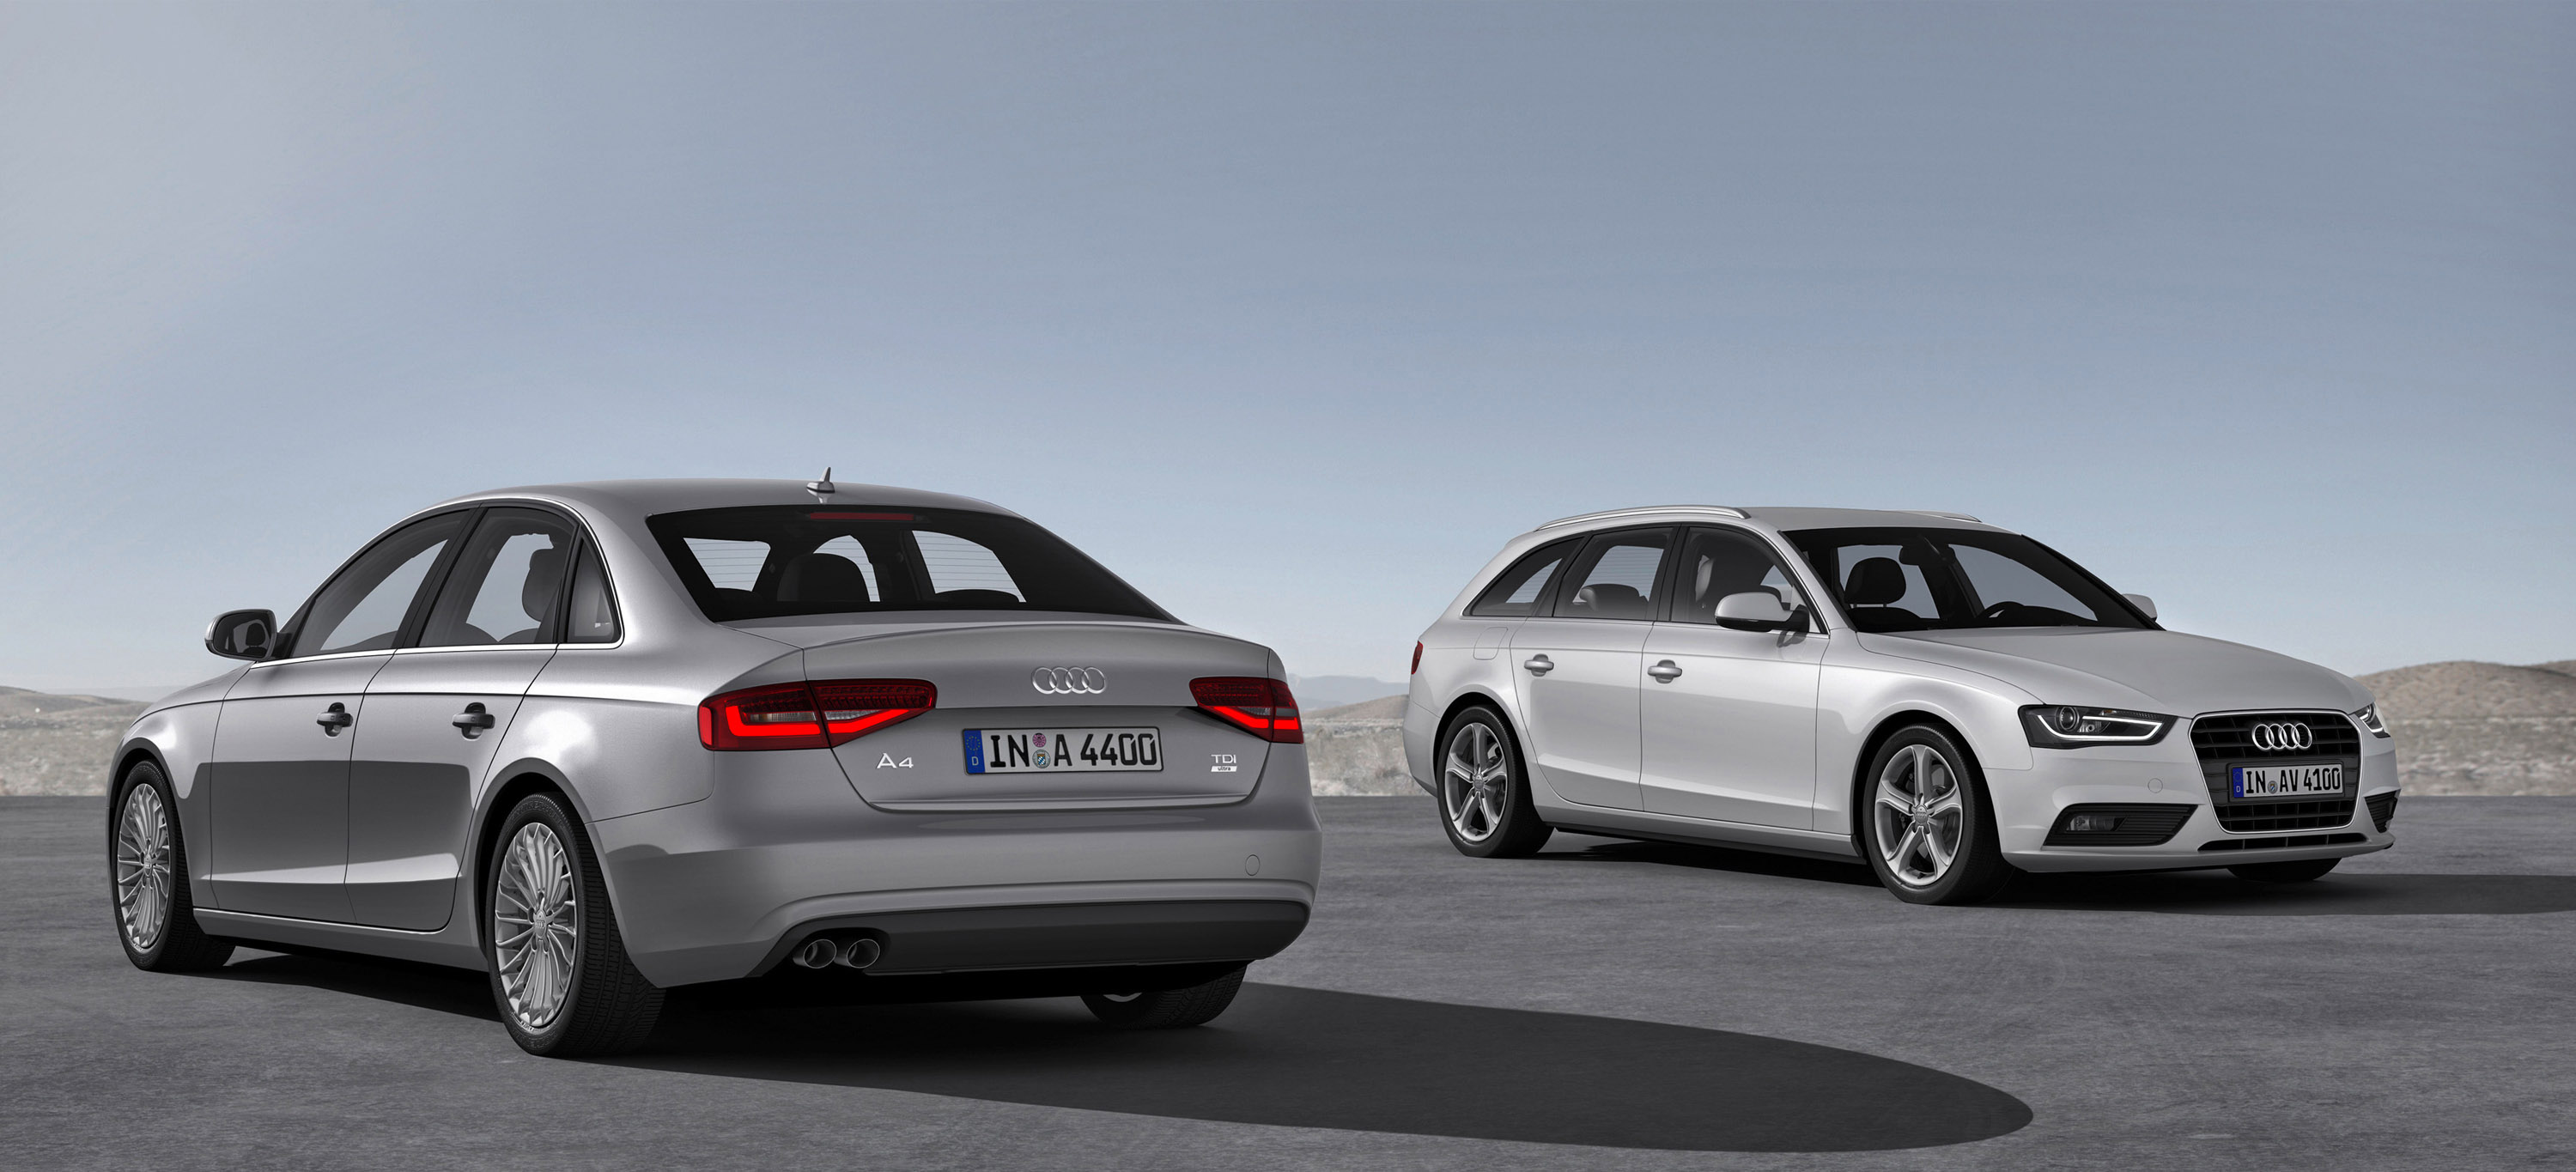 Audi A4 and A4 Avant TDI ultra